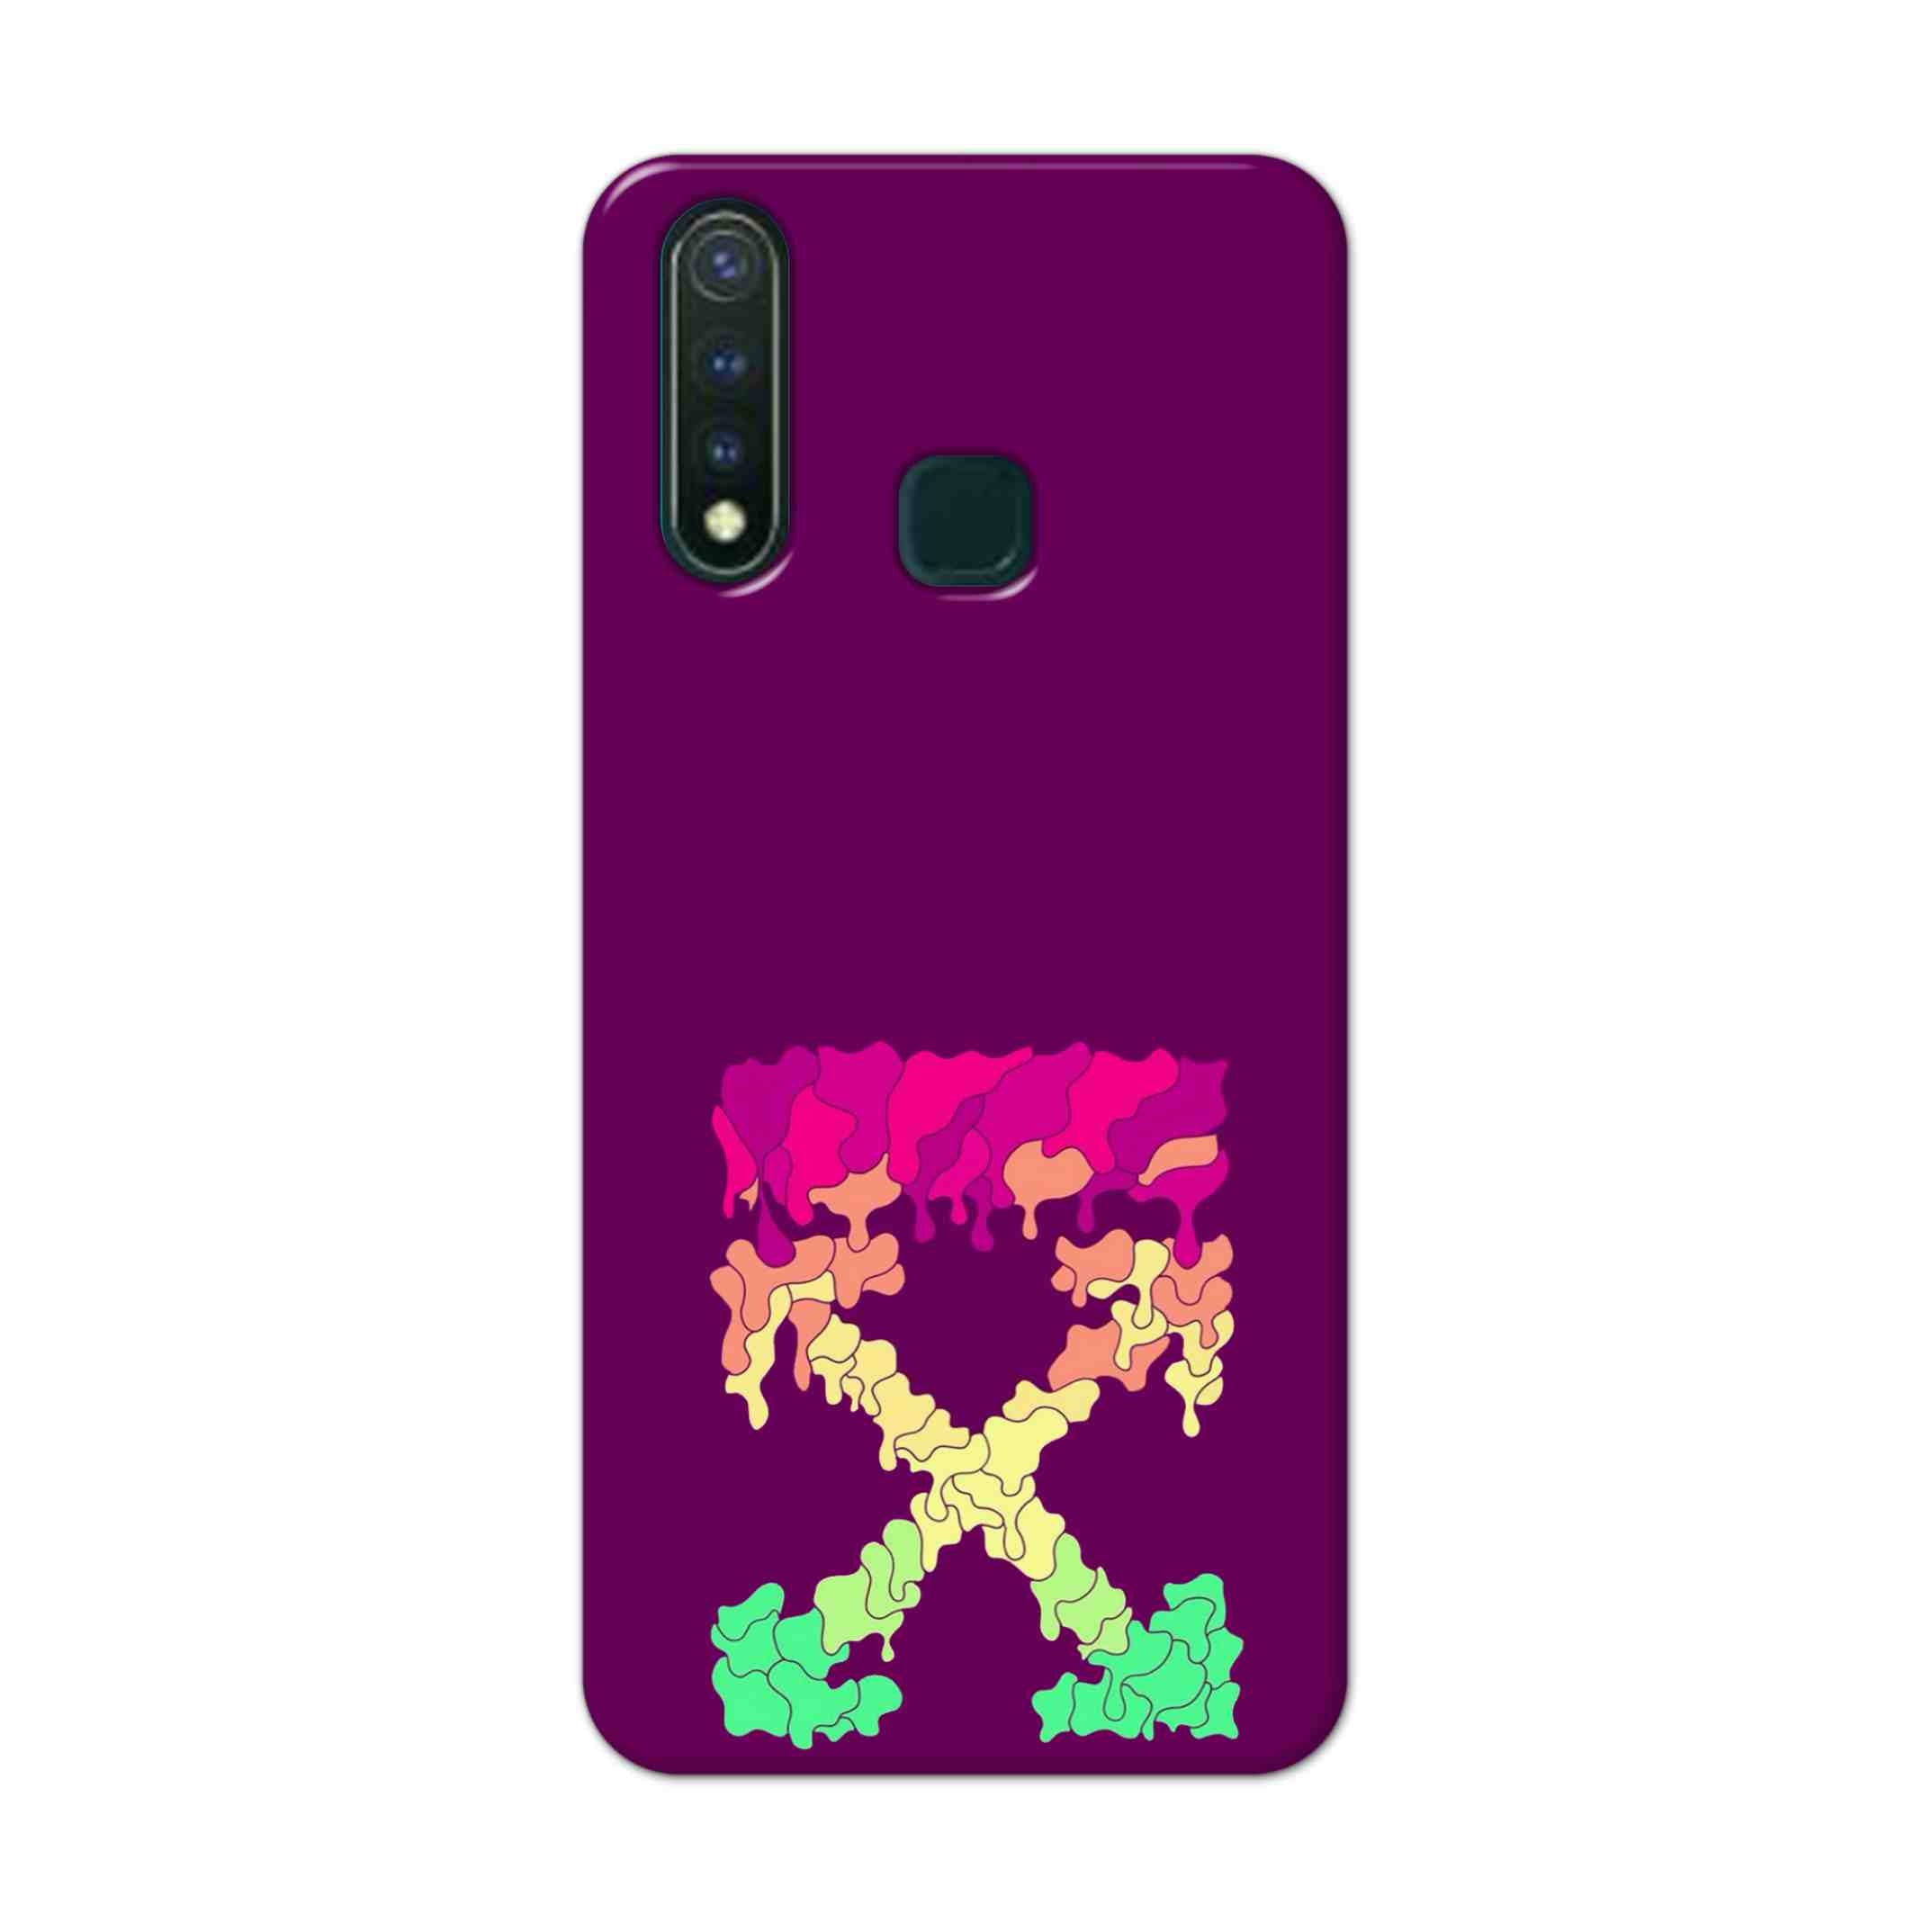 Buy X.O Hard Back Mobile Phone Case Cover For Vivo Y19 Online